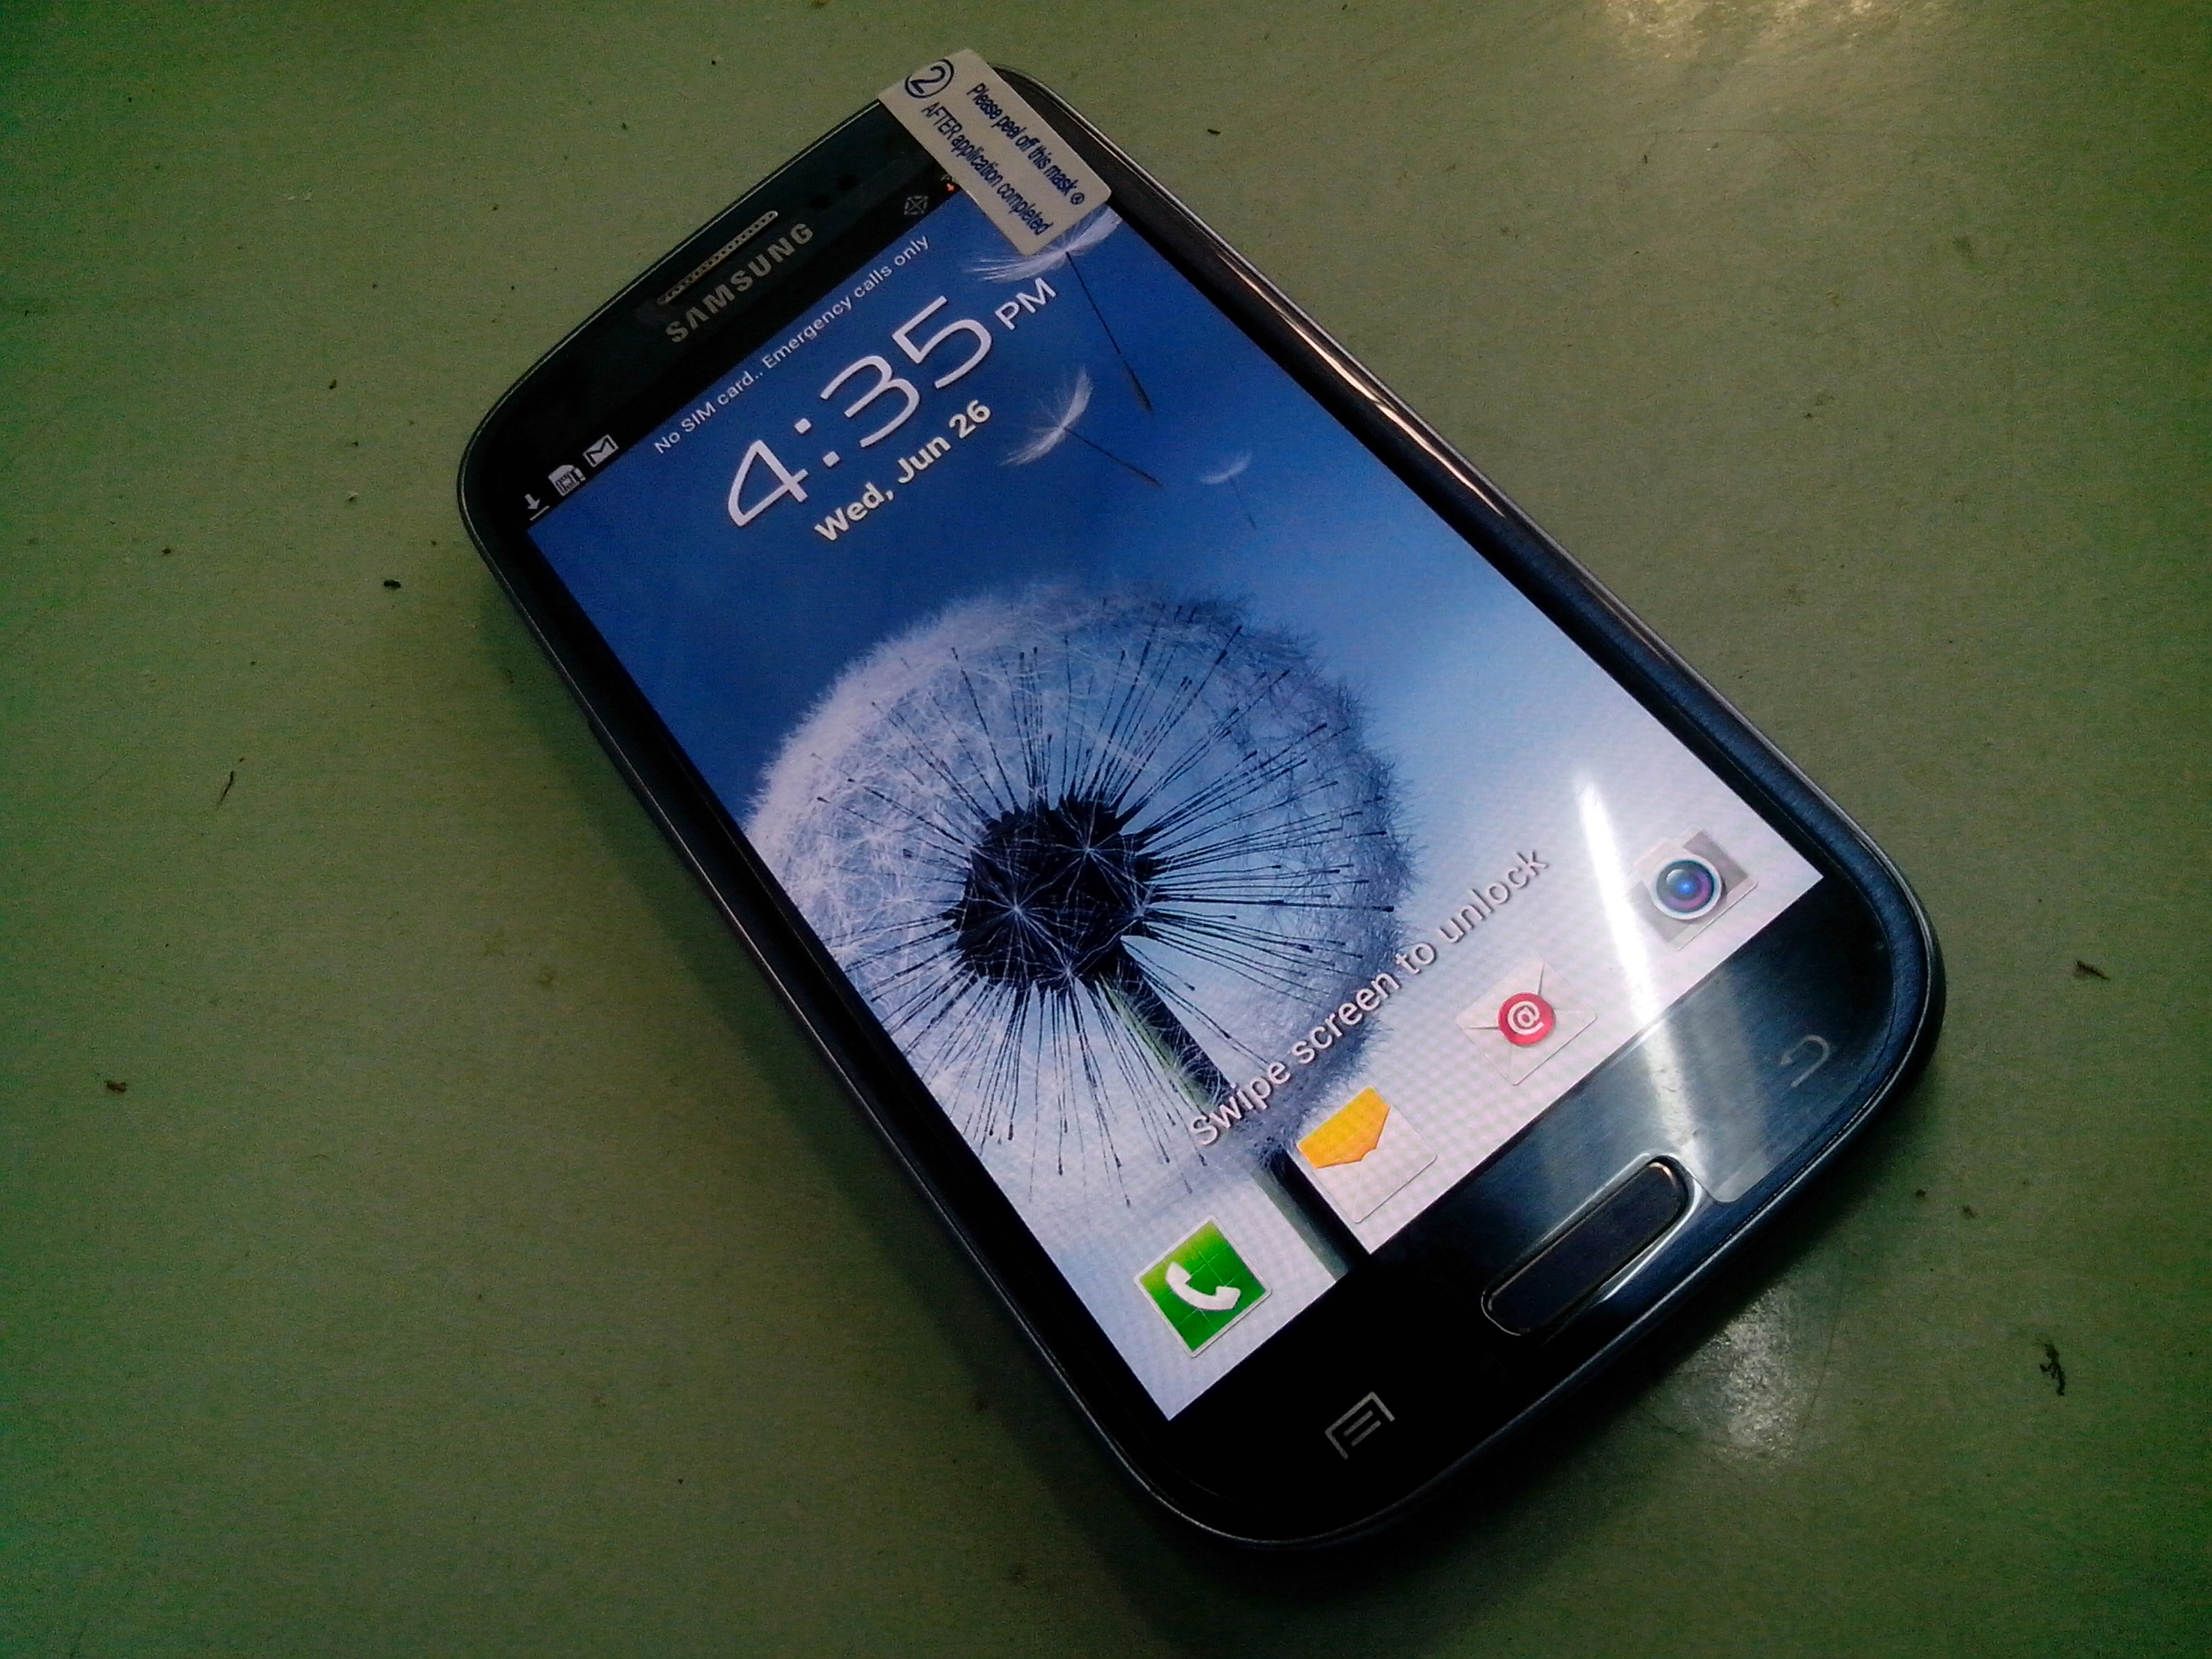 Samsung Galaxy SIII 4G GT-i9305 Amber Brown 16 Go - Mobile & smartphone Samsung sur LDLC.com